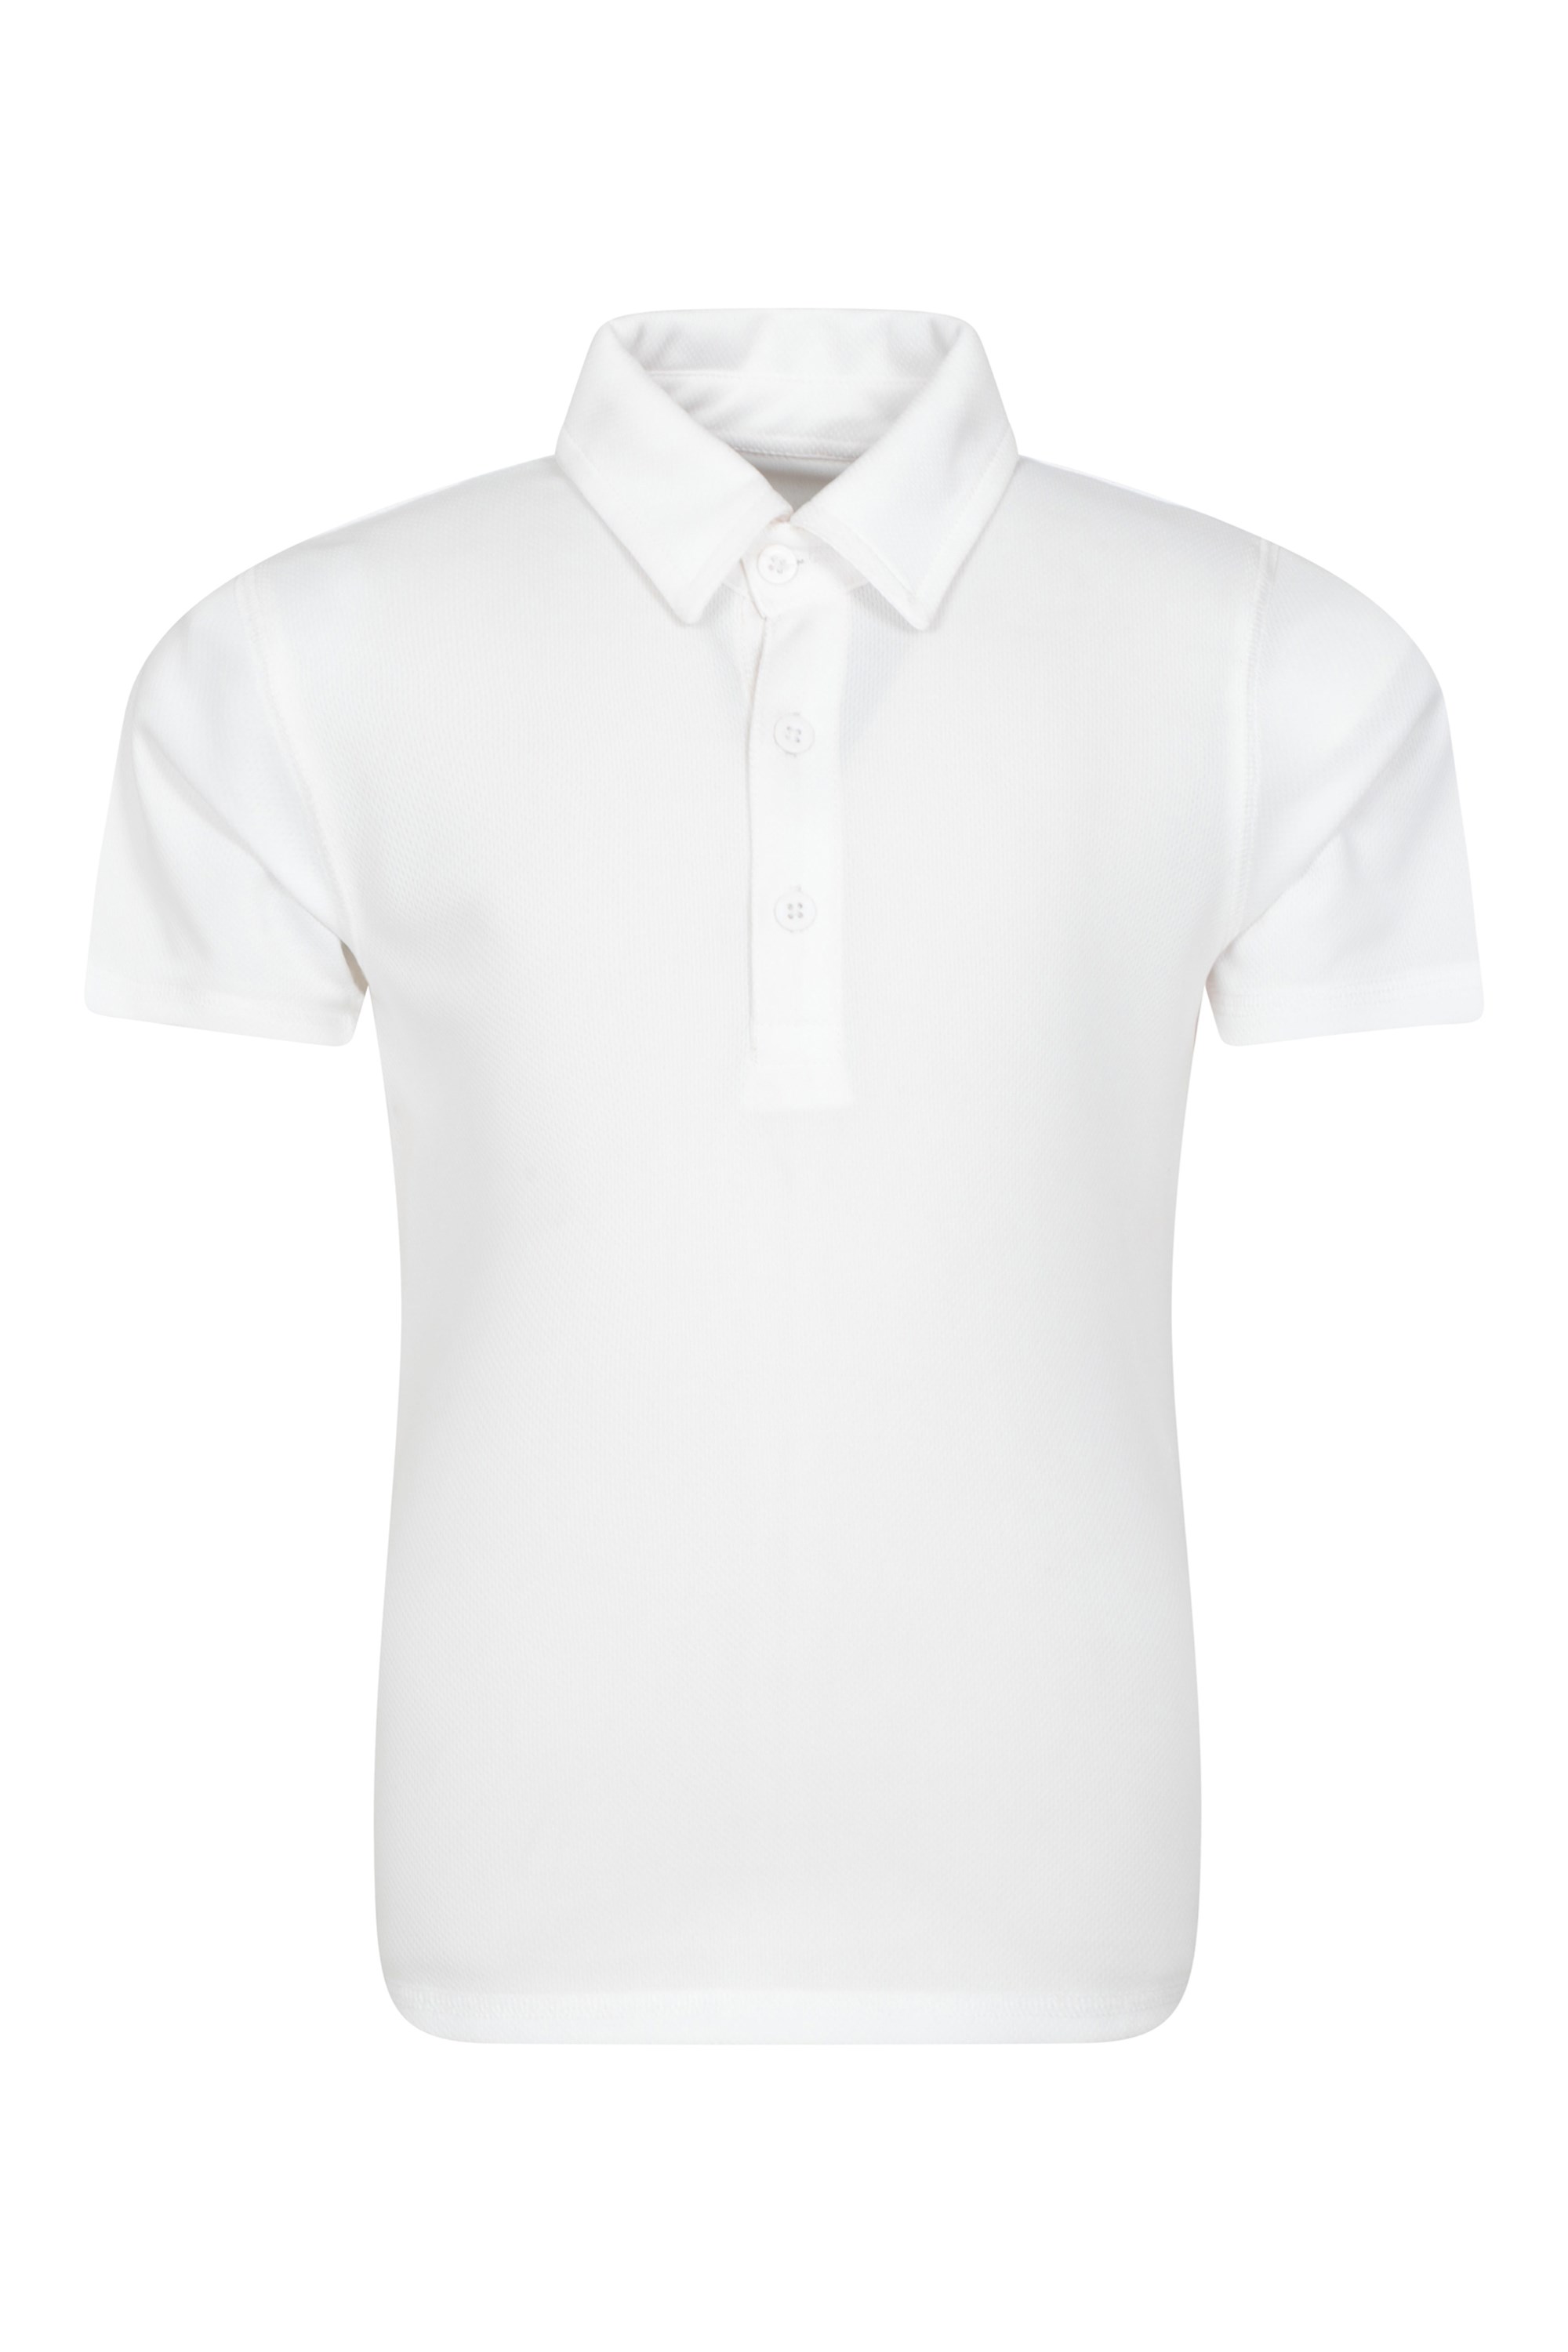 KINDER Hemden & T-Shirts Glitzer NoName T-Shirt Weiß 8Y Rabatt 98 % 